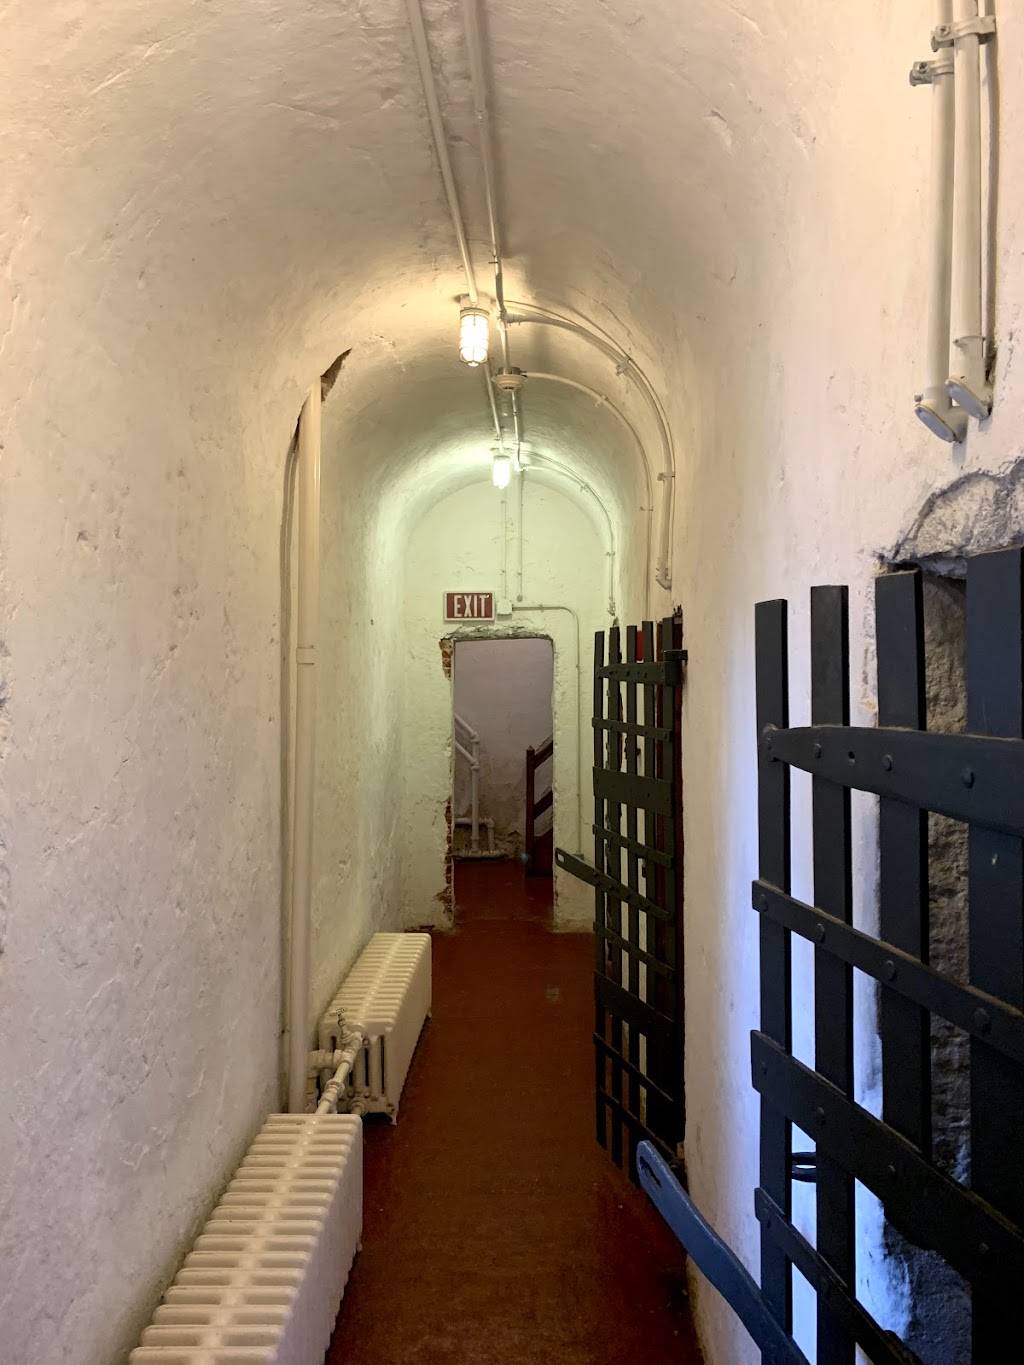 Burlington County Prison Museum | 128 High St, Mt Holly, NJ 08060 | Phone: (609) 265-5476